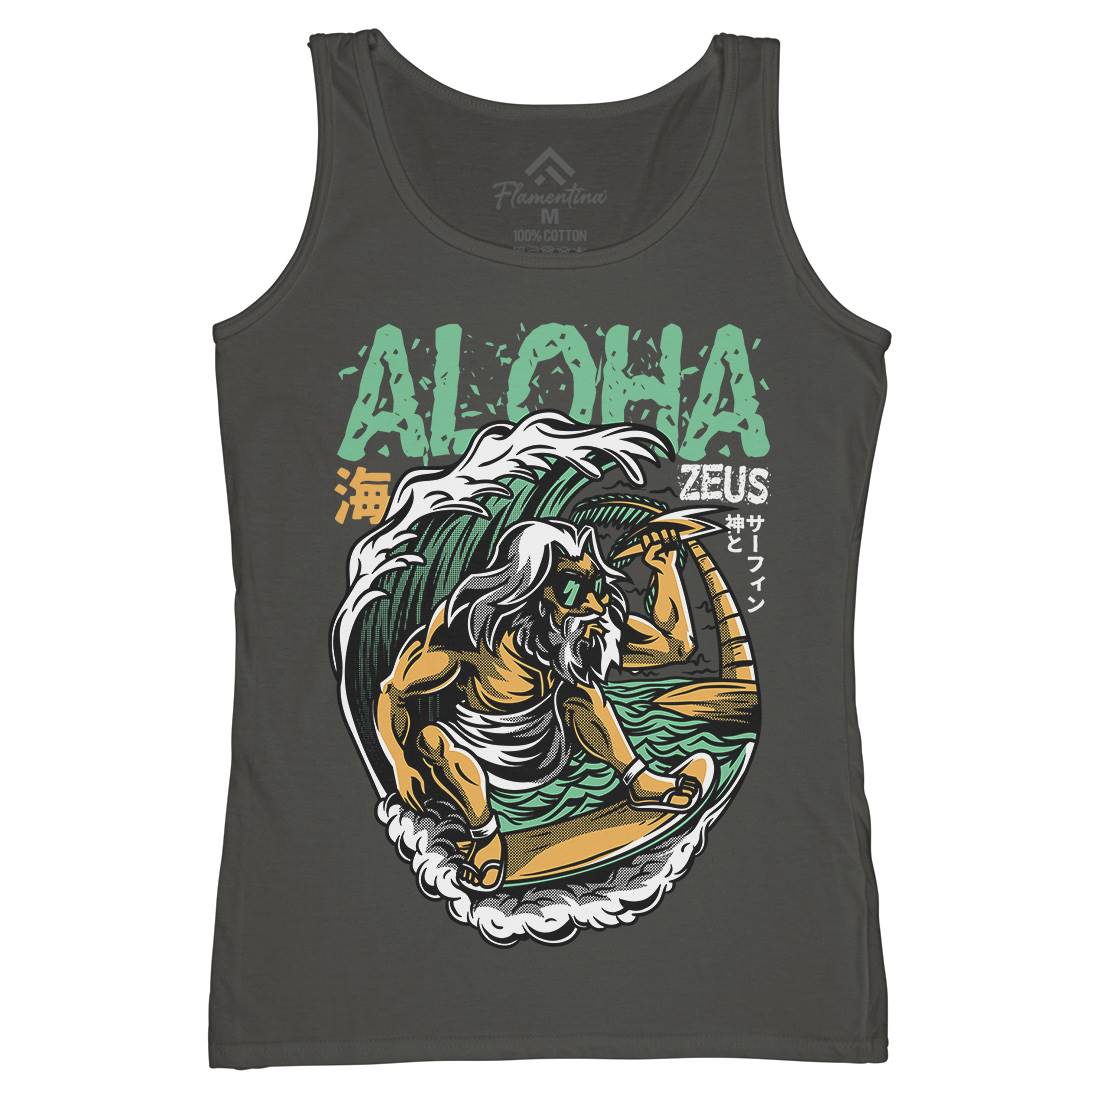 Aloha Zeus Womens Organic Tank Top Vest Surf D703